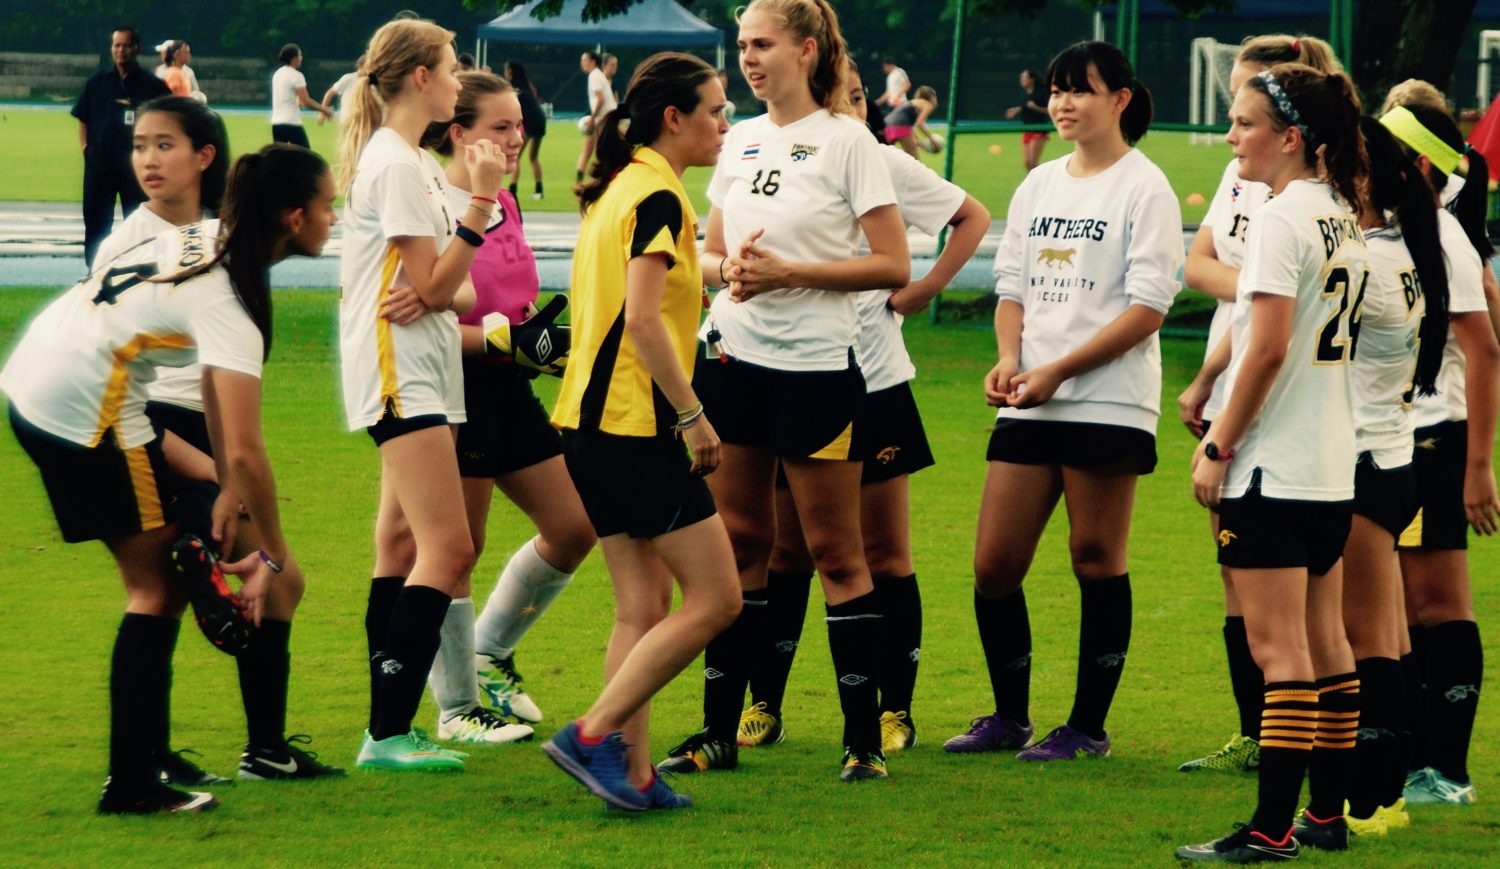 JV Girls Soccer Scare Shrewsbury Storm